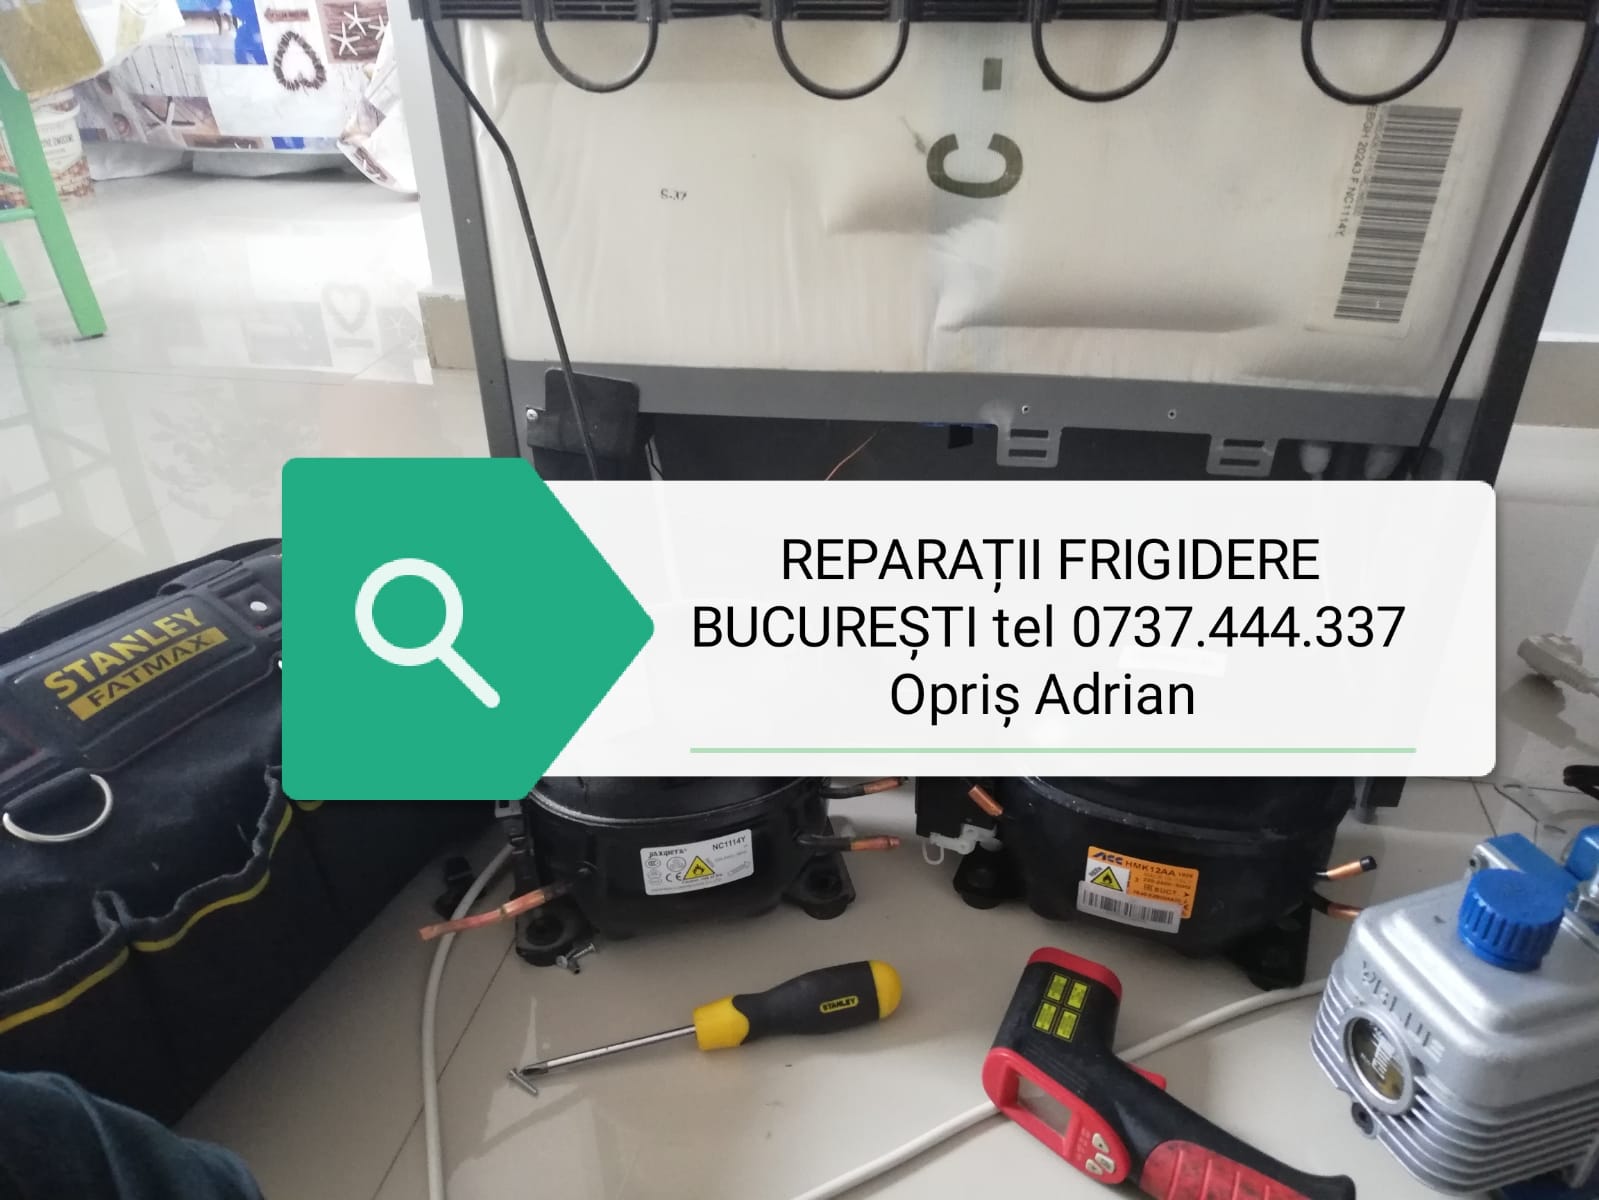 The office Hectares Overwhelm Reparatii frigidere Whirlpool - tel.07FRIGIDER